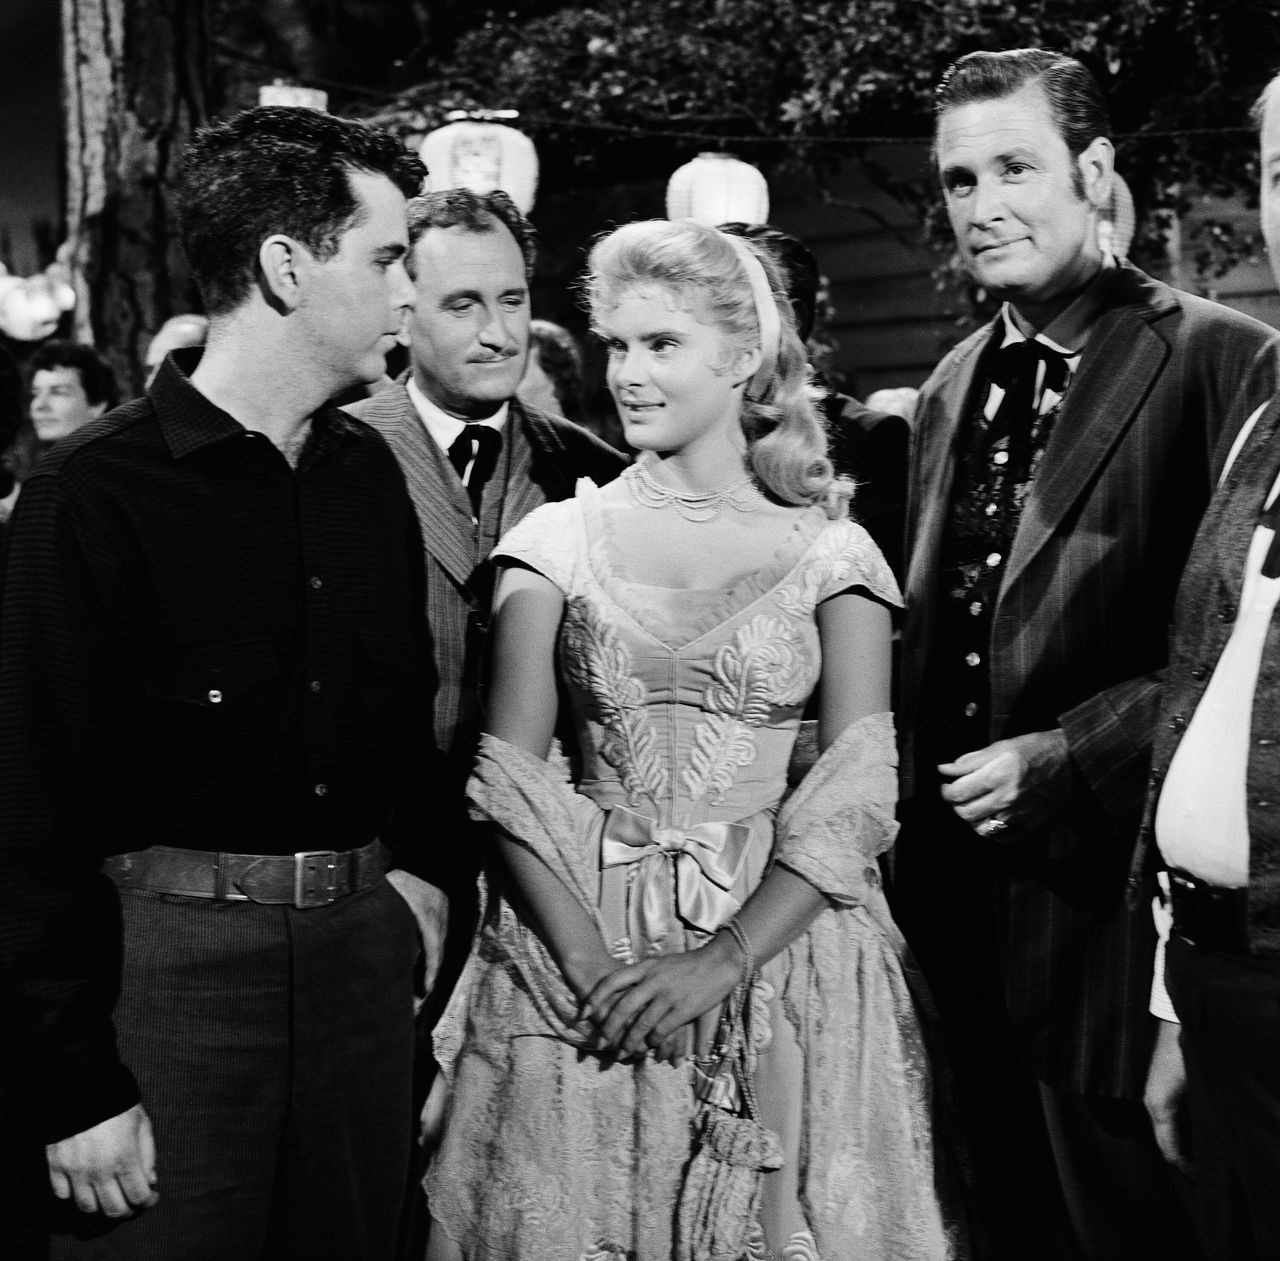 Jim Galante (left), Ken Mayer, Natalie Trundy and Barker appear on an episode of "Bonanza" on July 25, 1960.